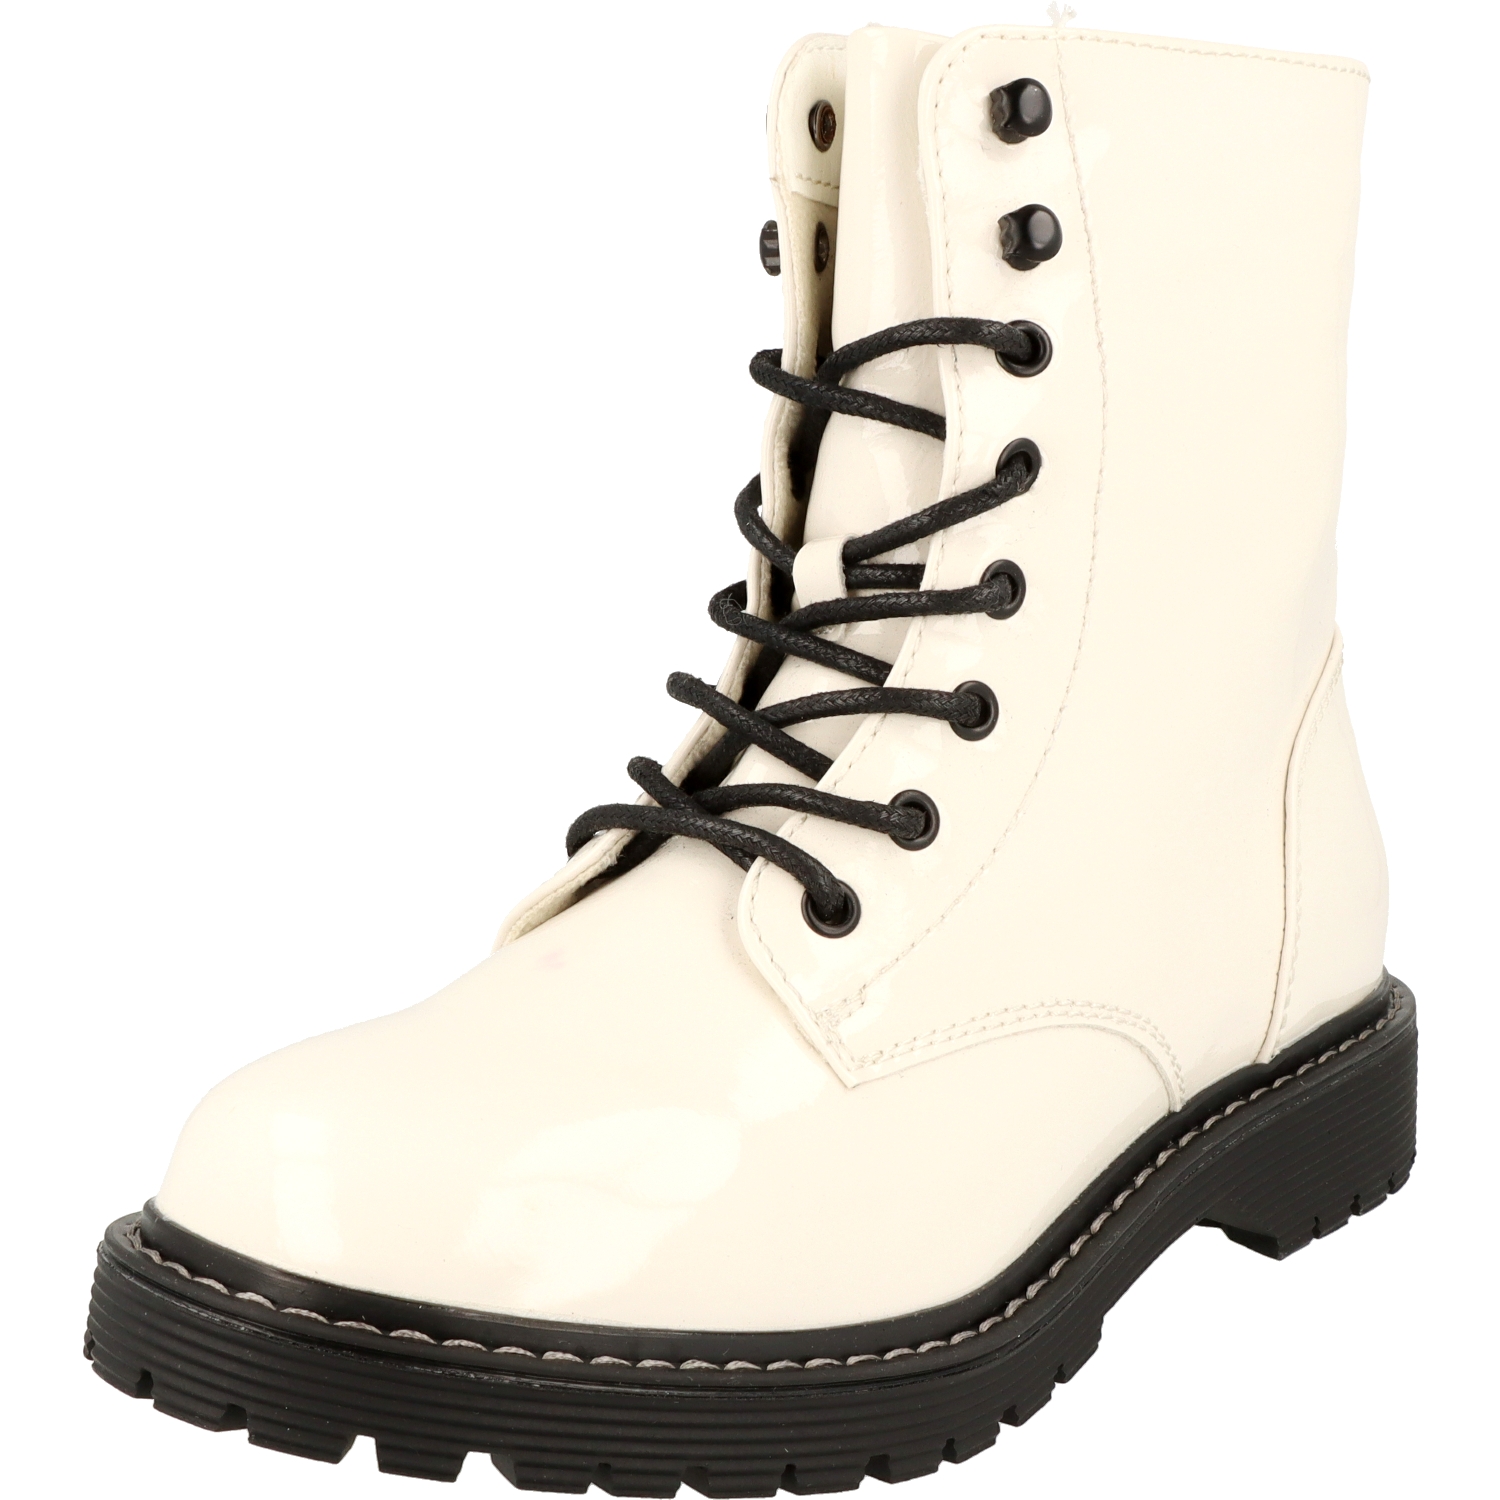 Jane Klain Damen Schuhe Boots Stiefel 252-449 Weiß Lack Reißverschluss